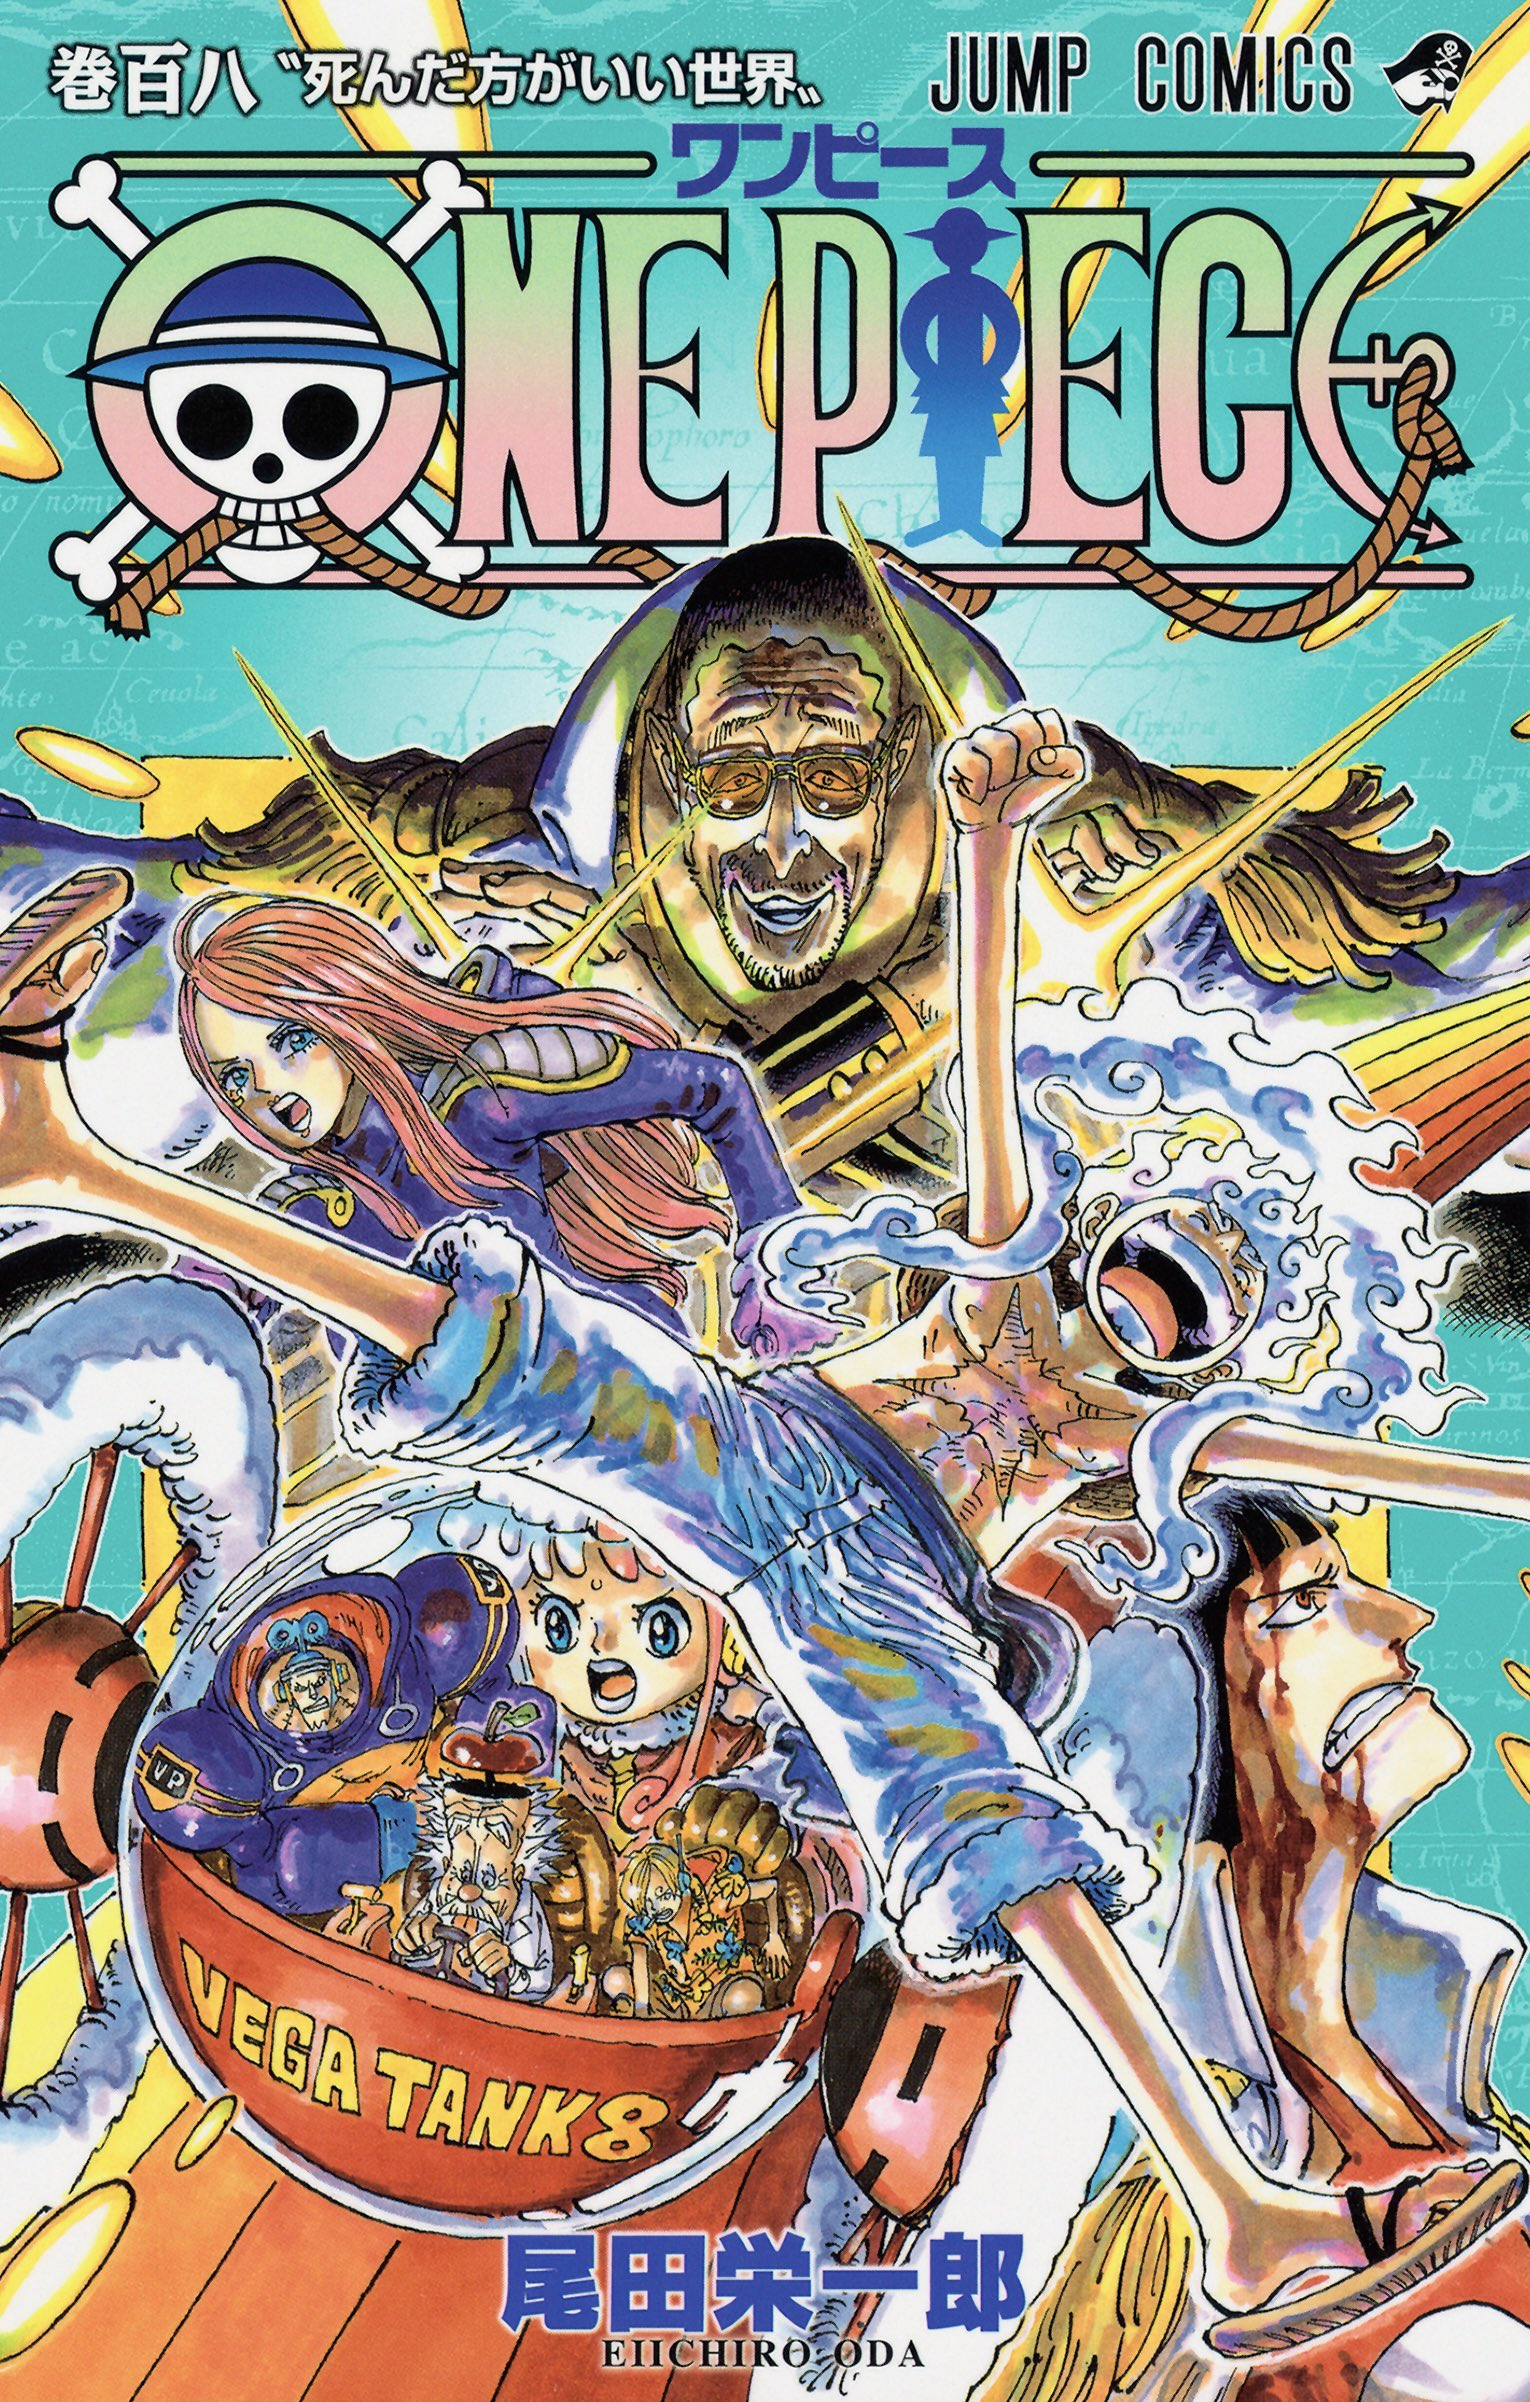 One Piece Manga Vol. 102, 103, 104, 105, 106 Set - Japanese Edition - Brand  New